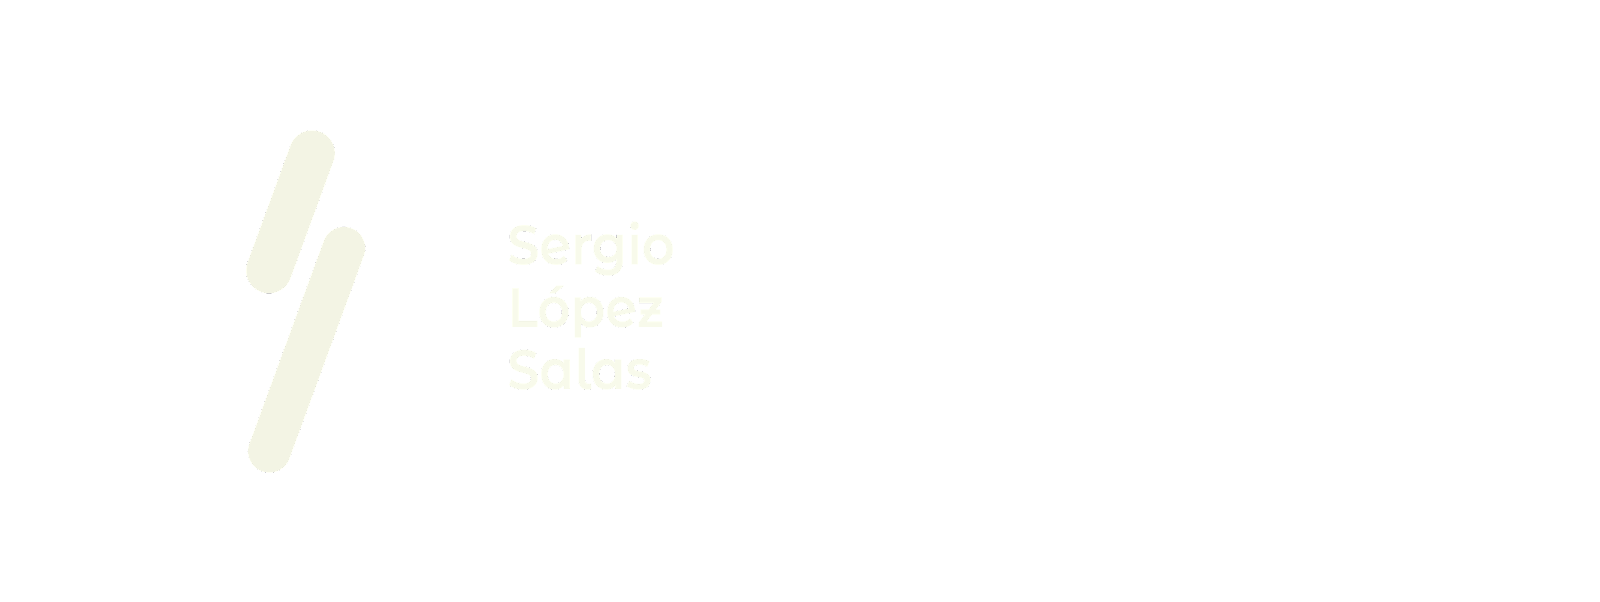 Sergio López Salas